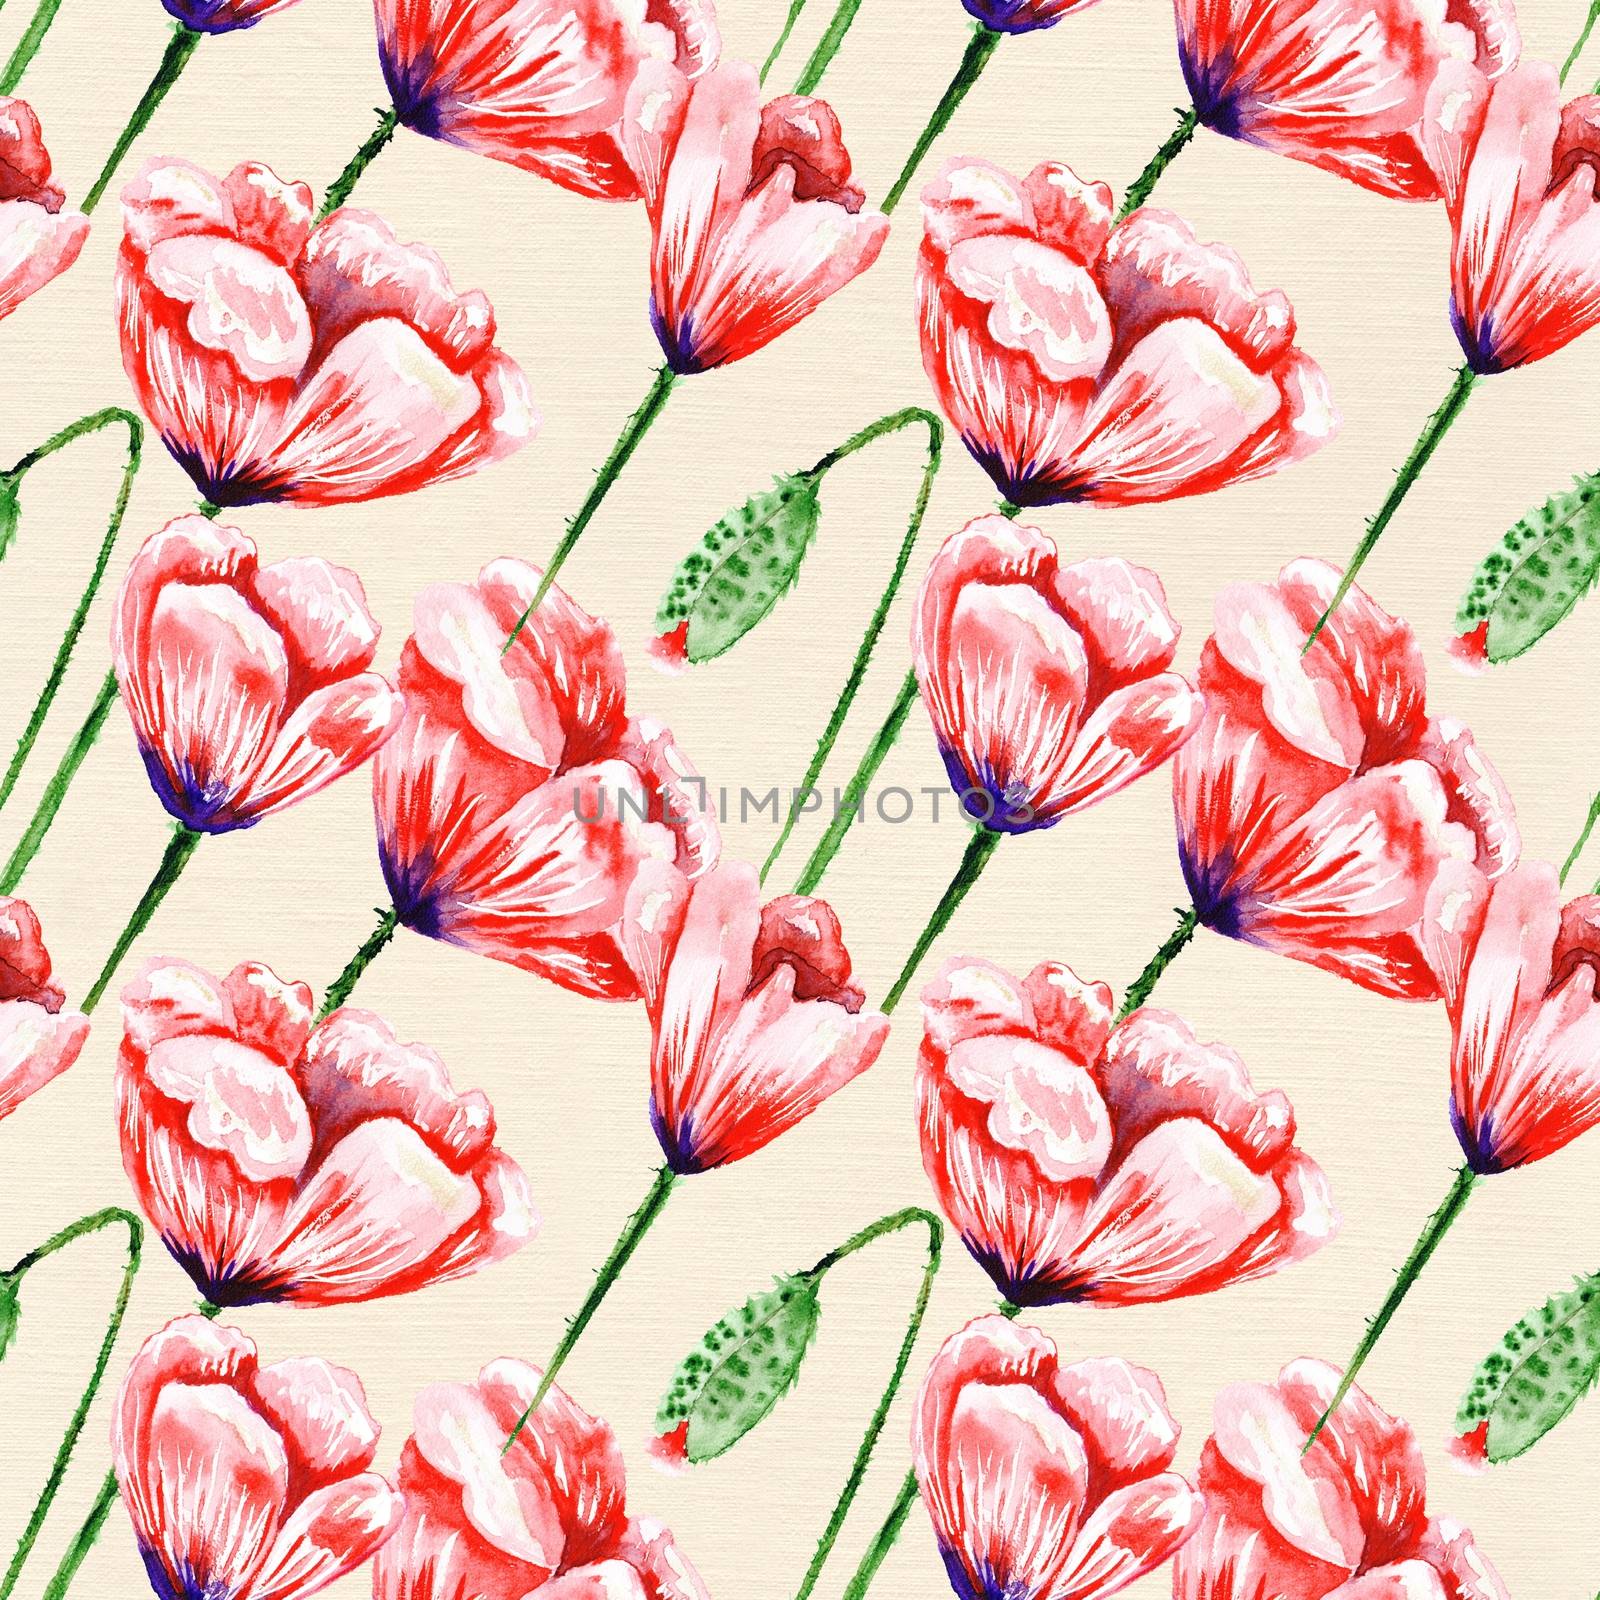 Vintage poppy pattern on linen watercolor paper by kisika